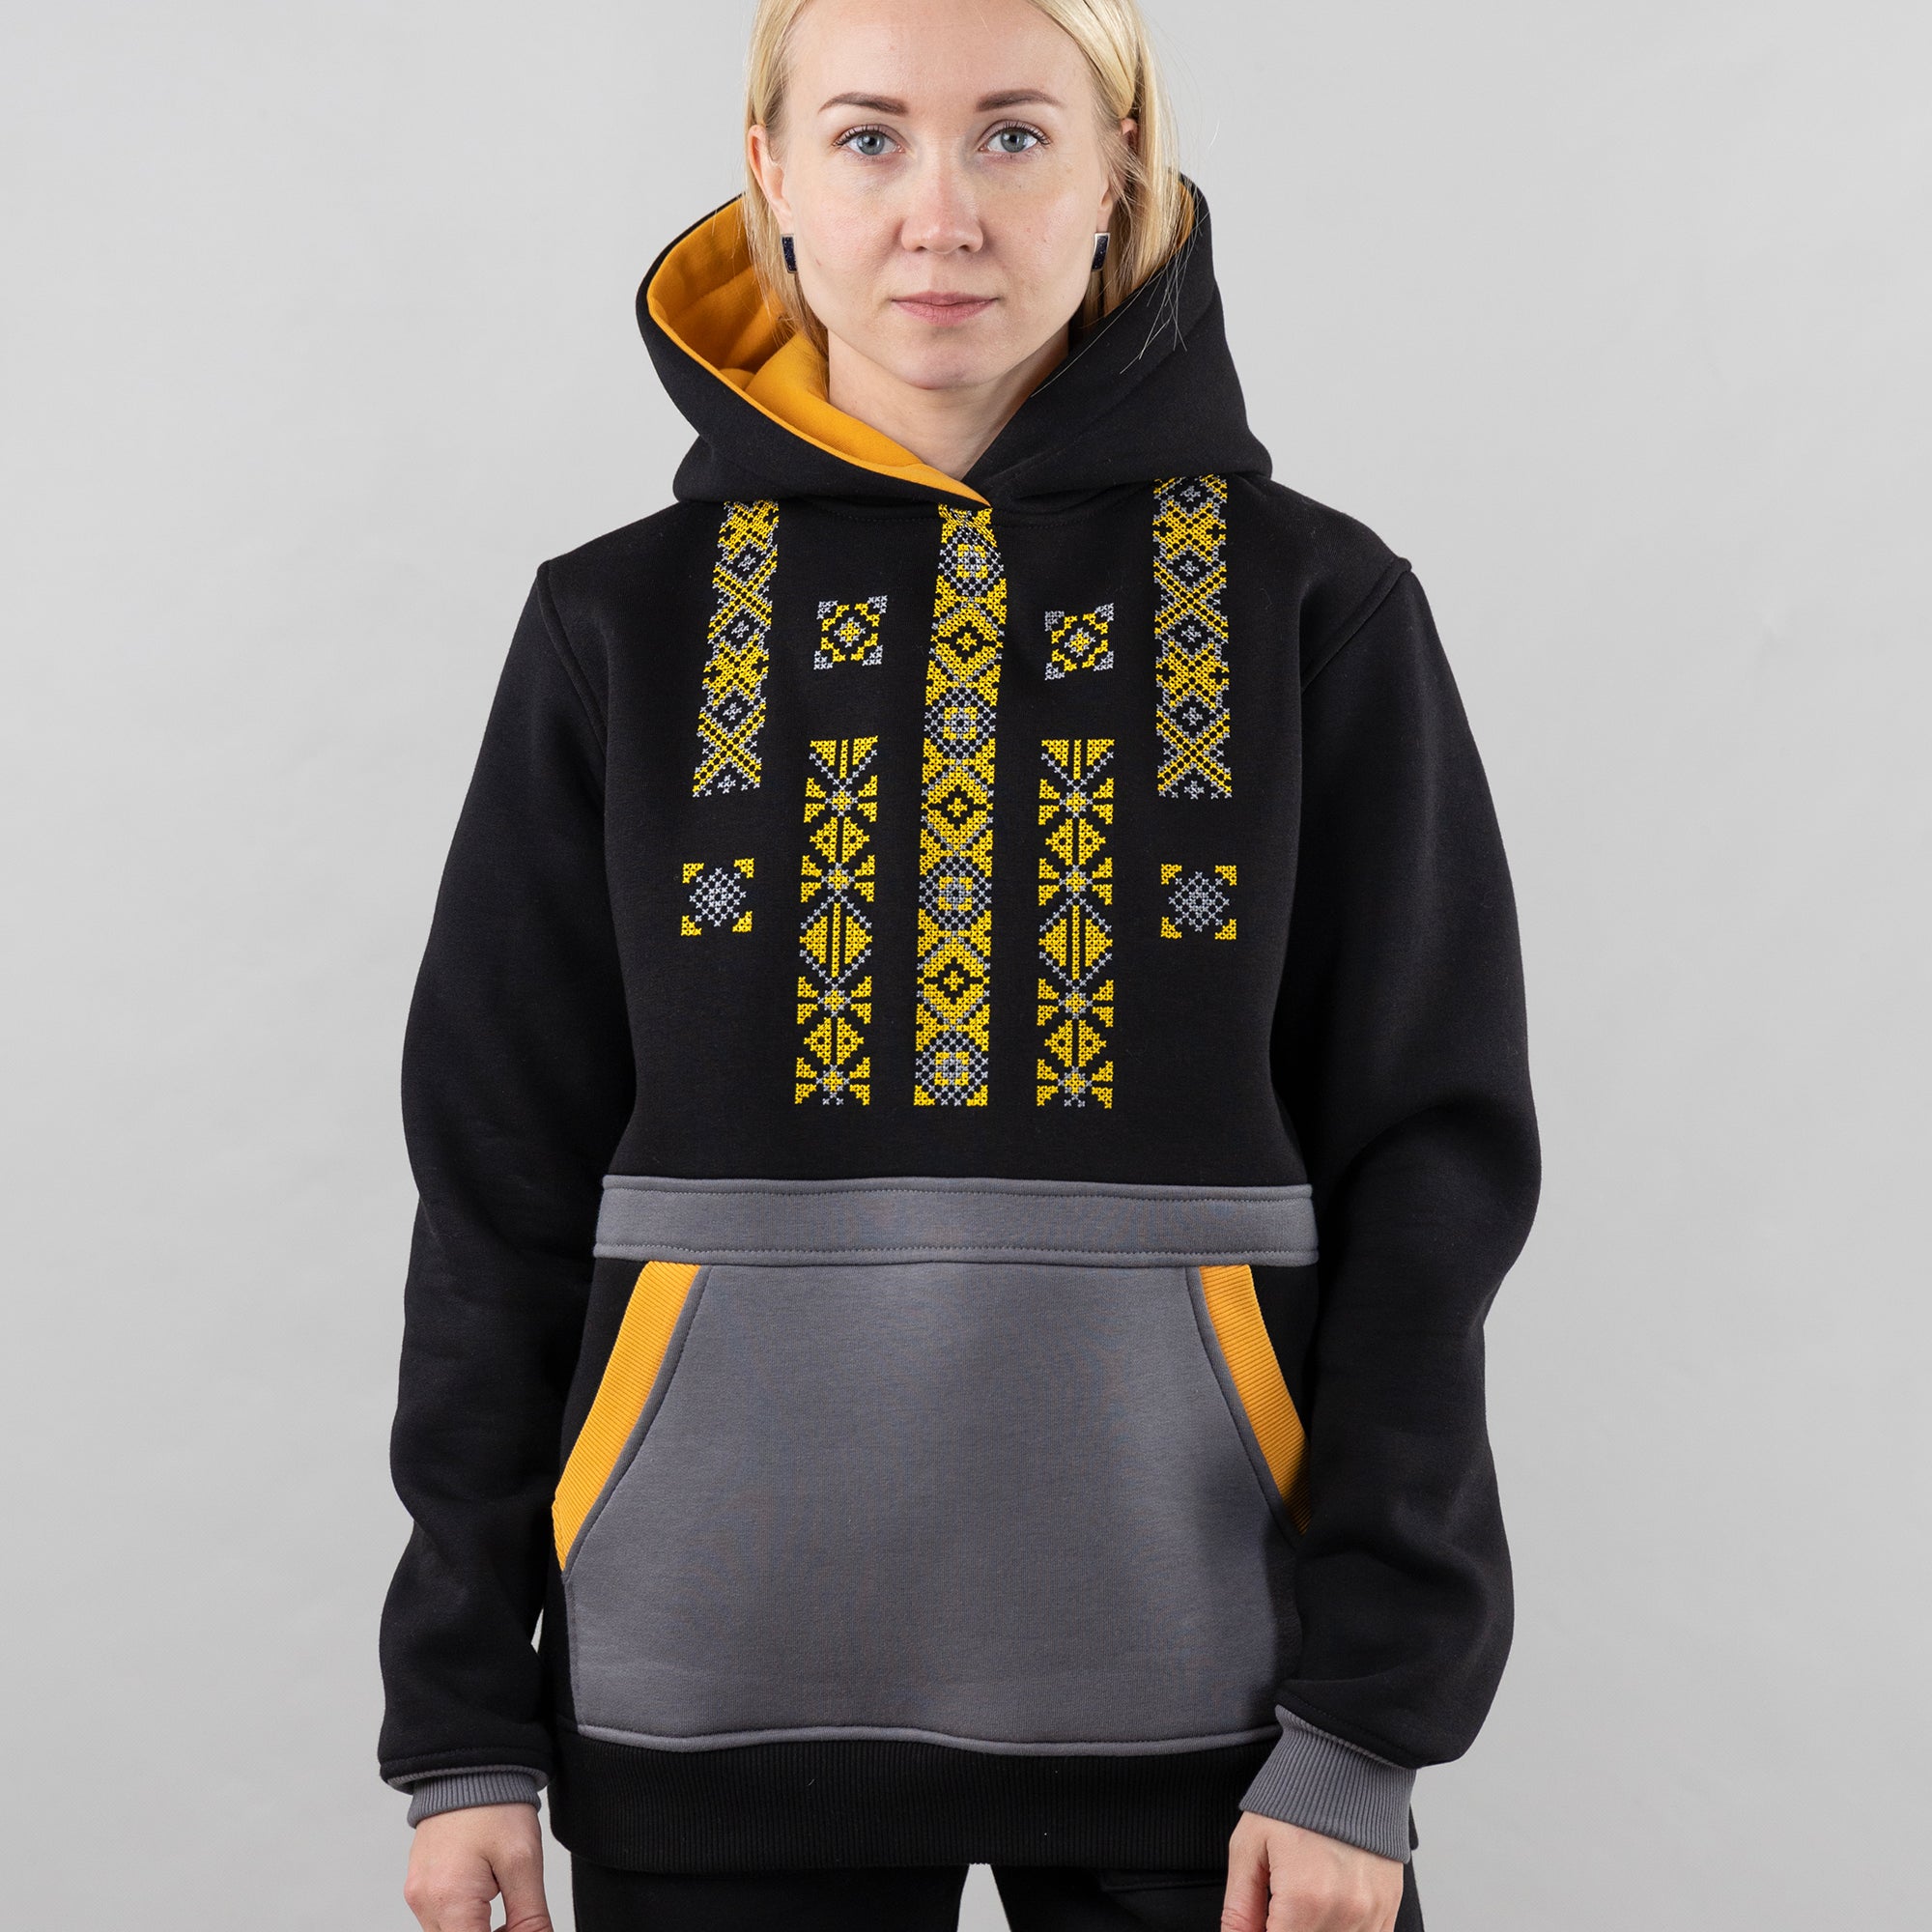 Hoodie "Folk", warm casual hoodie Ukrainian vyshyvanka style for women